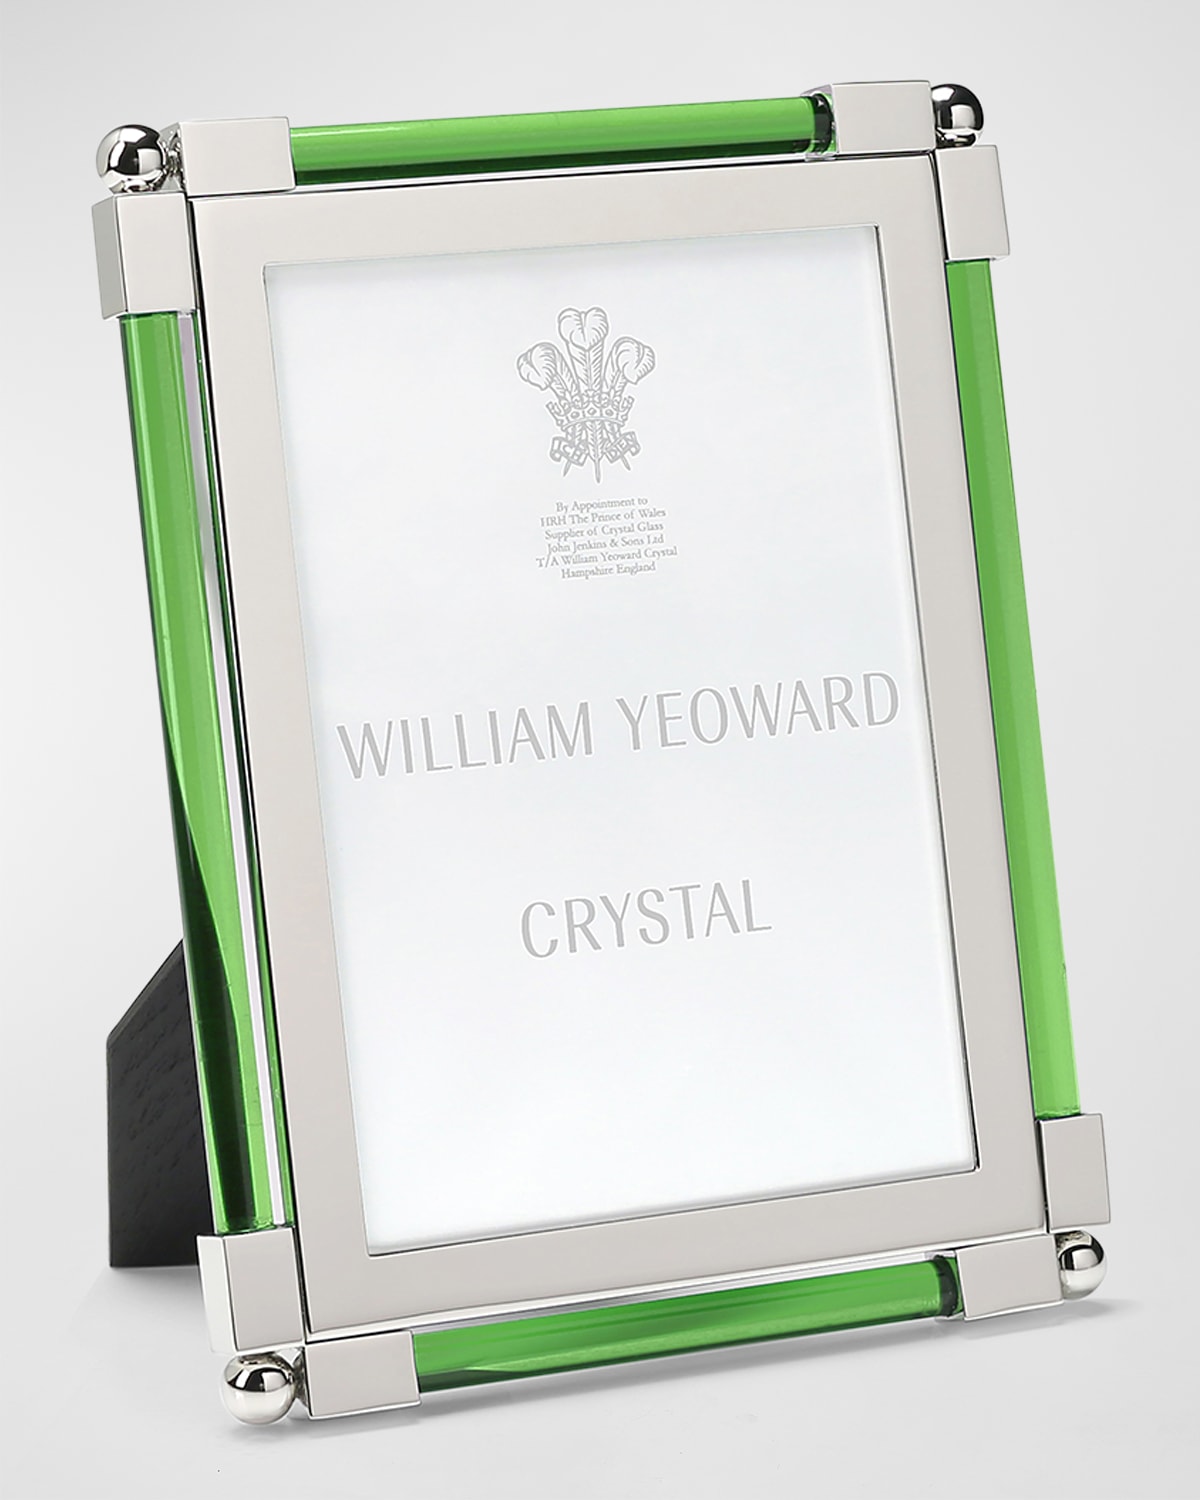 WILLIAM YEOWARD CRYSTAL NEW CLASSIC GREEN FRAME, 5 X 7